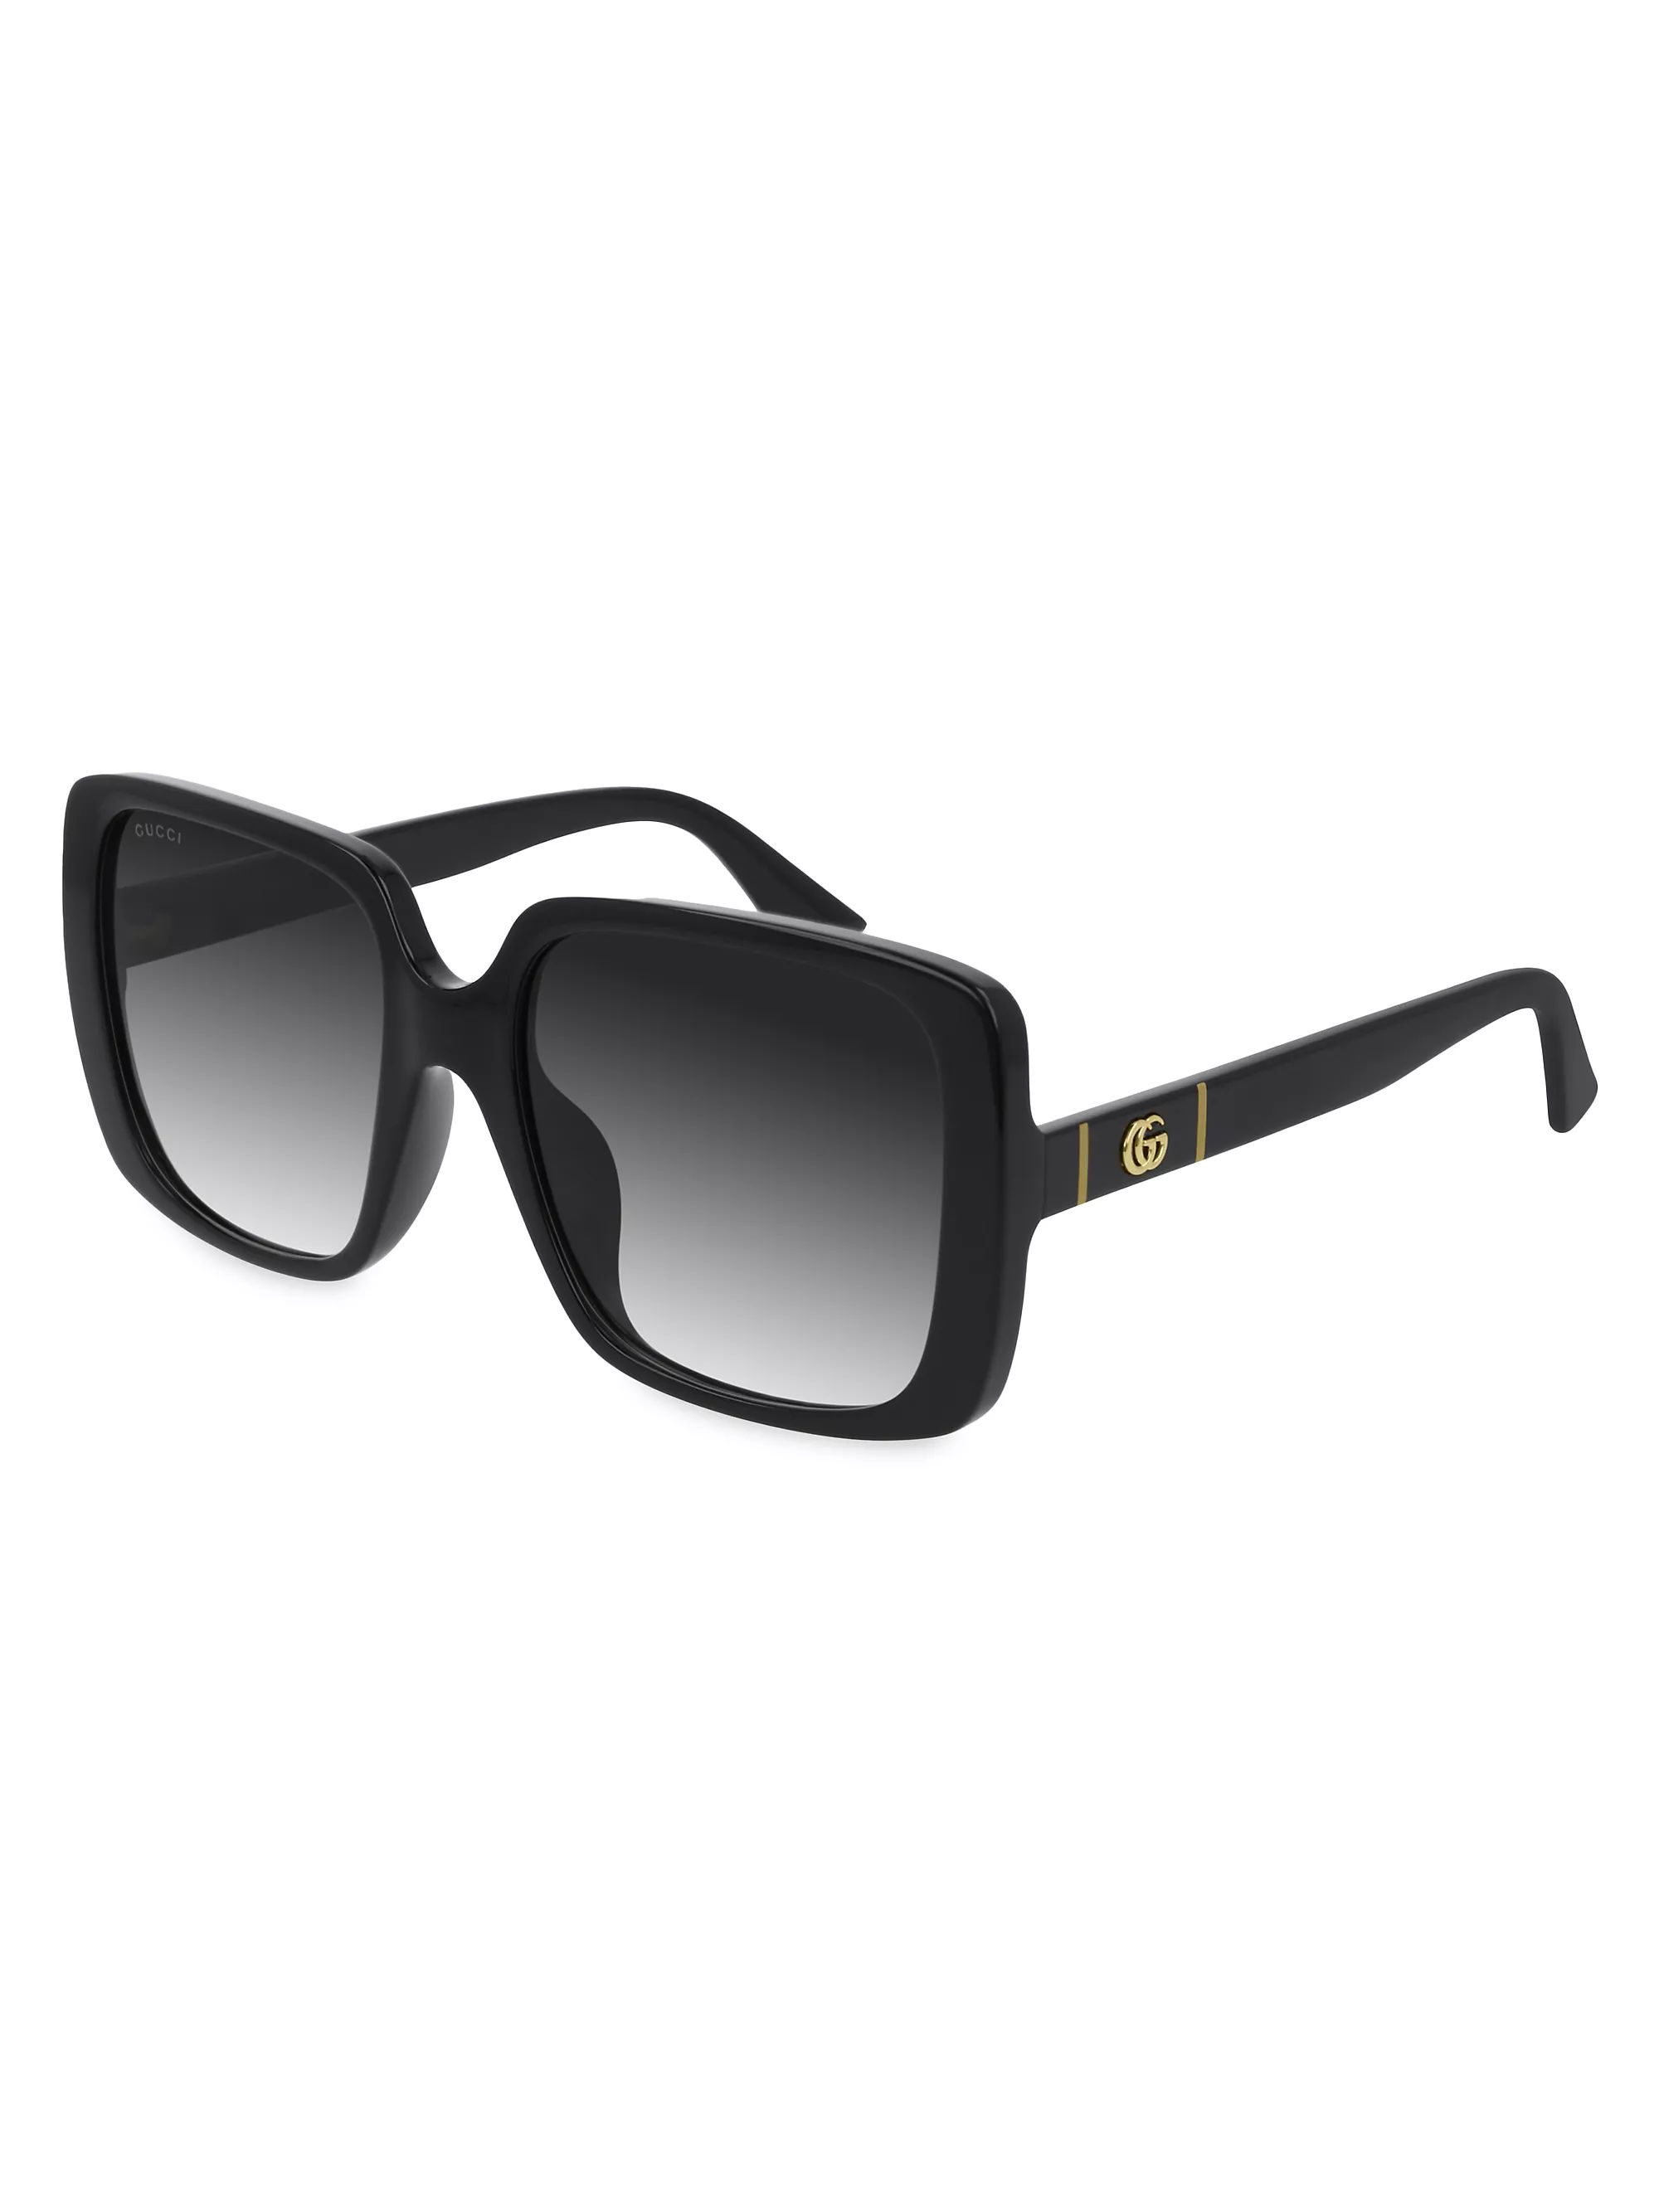 Shop Gucci Gucci Lines 56MM Rectangular Sunglasses | Saks Fifth Avenue | Saks Fifth Avenue